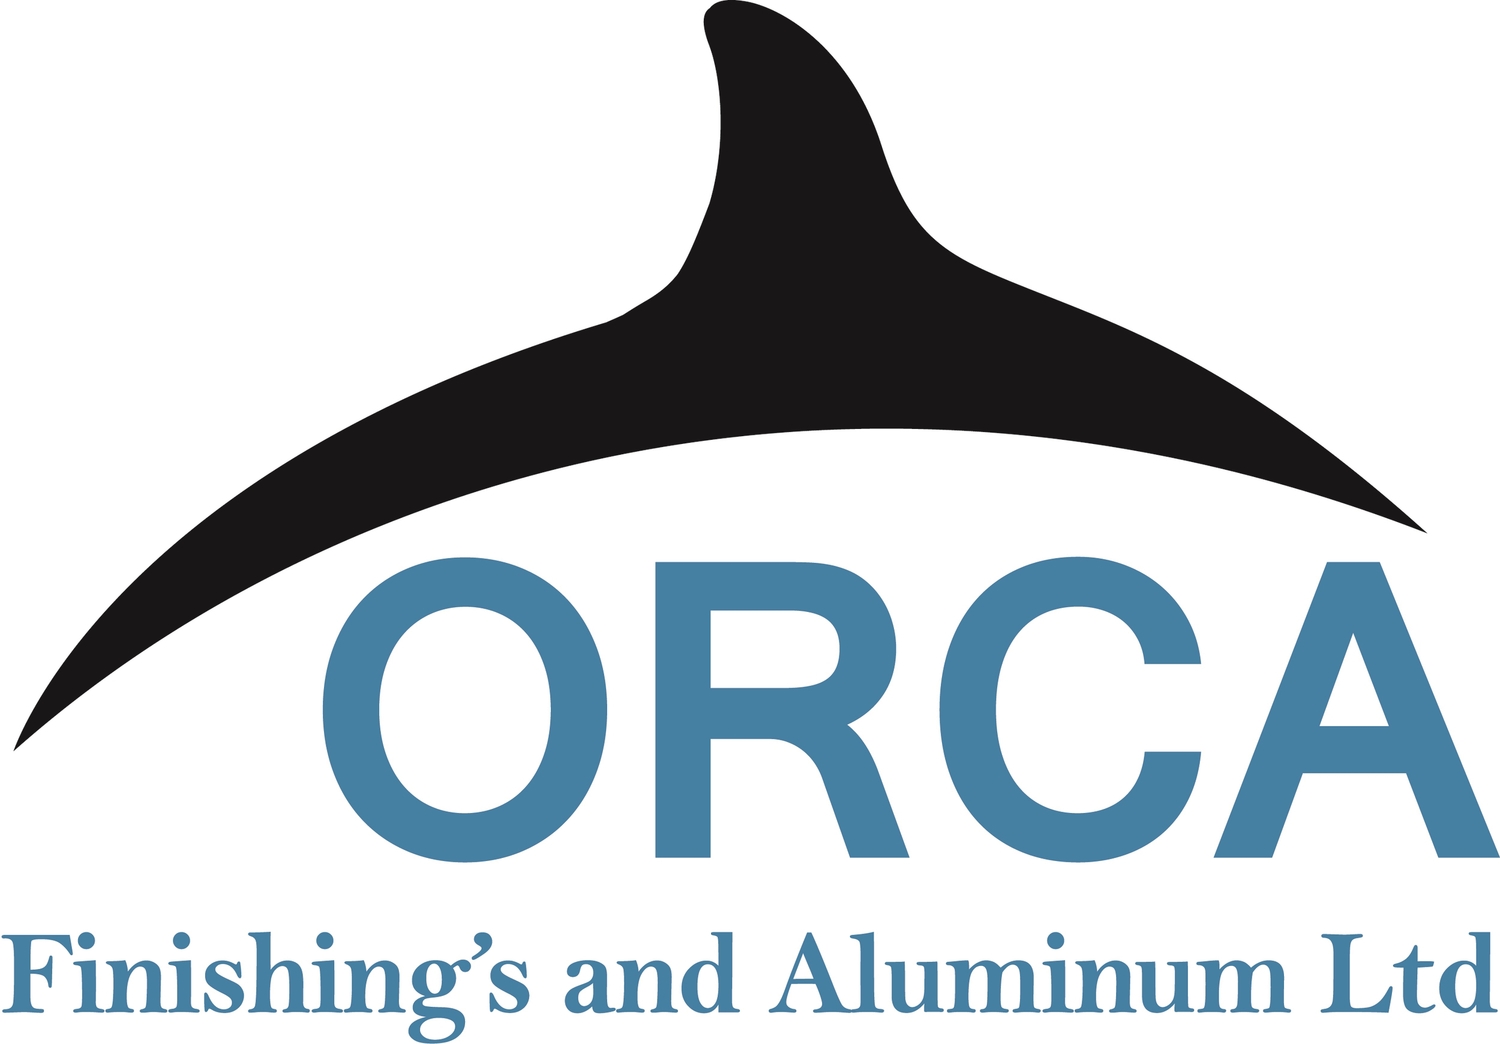 Orca Finishing's and Aluminum Ltd